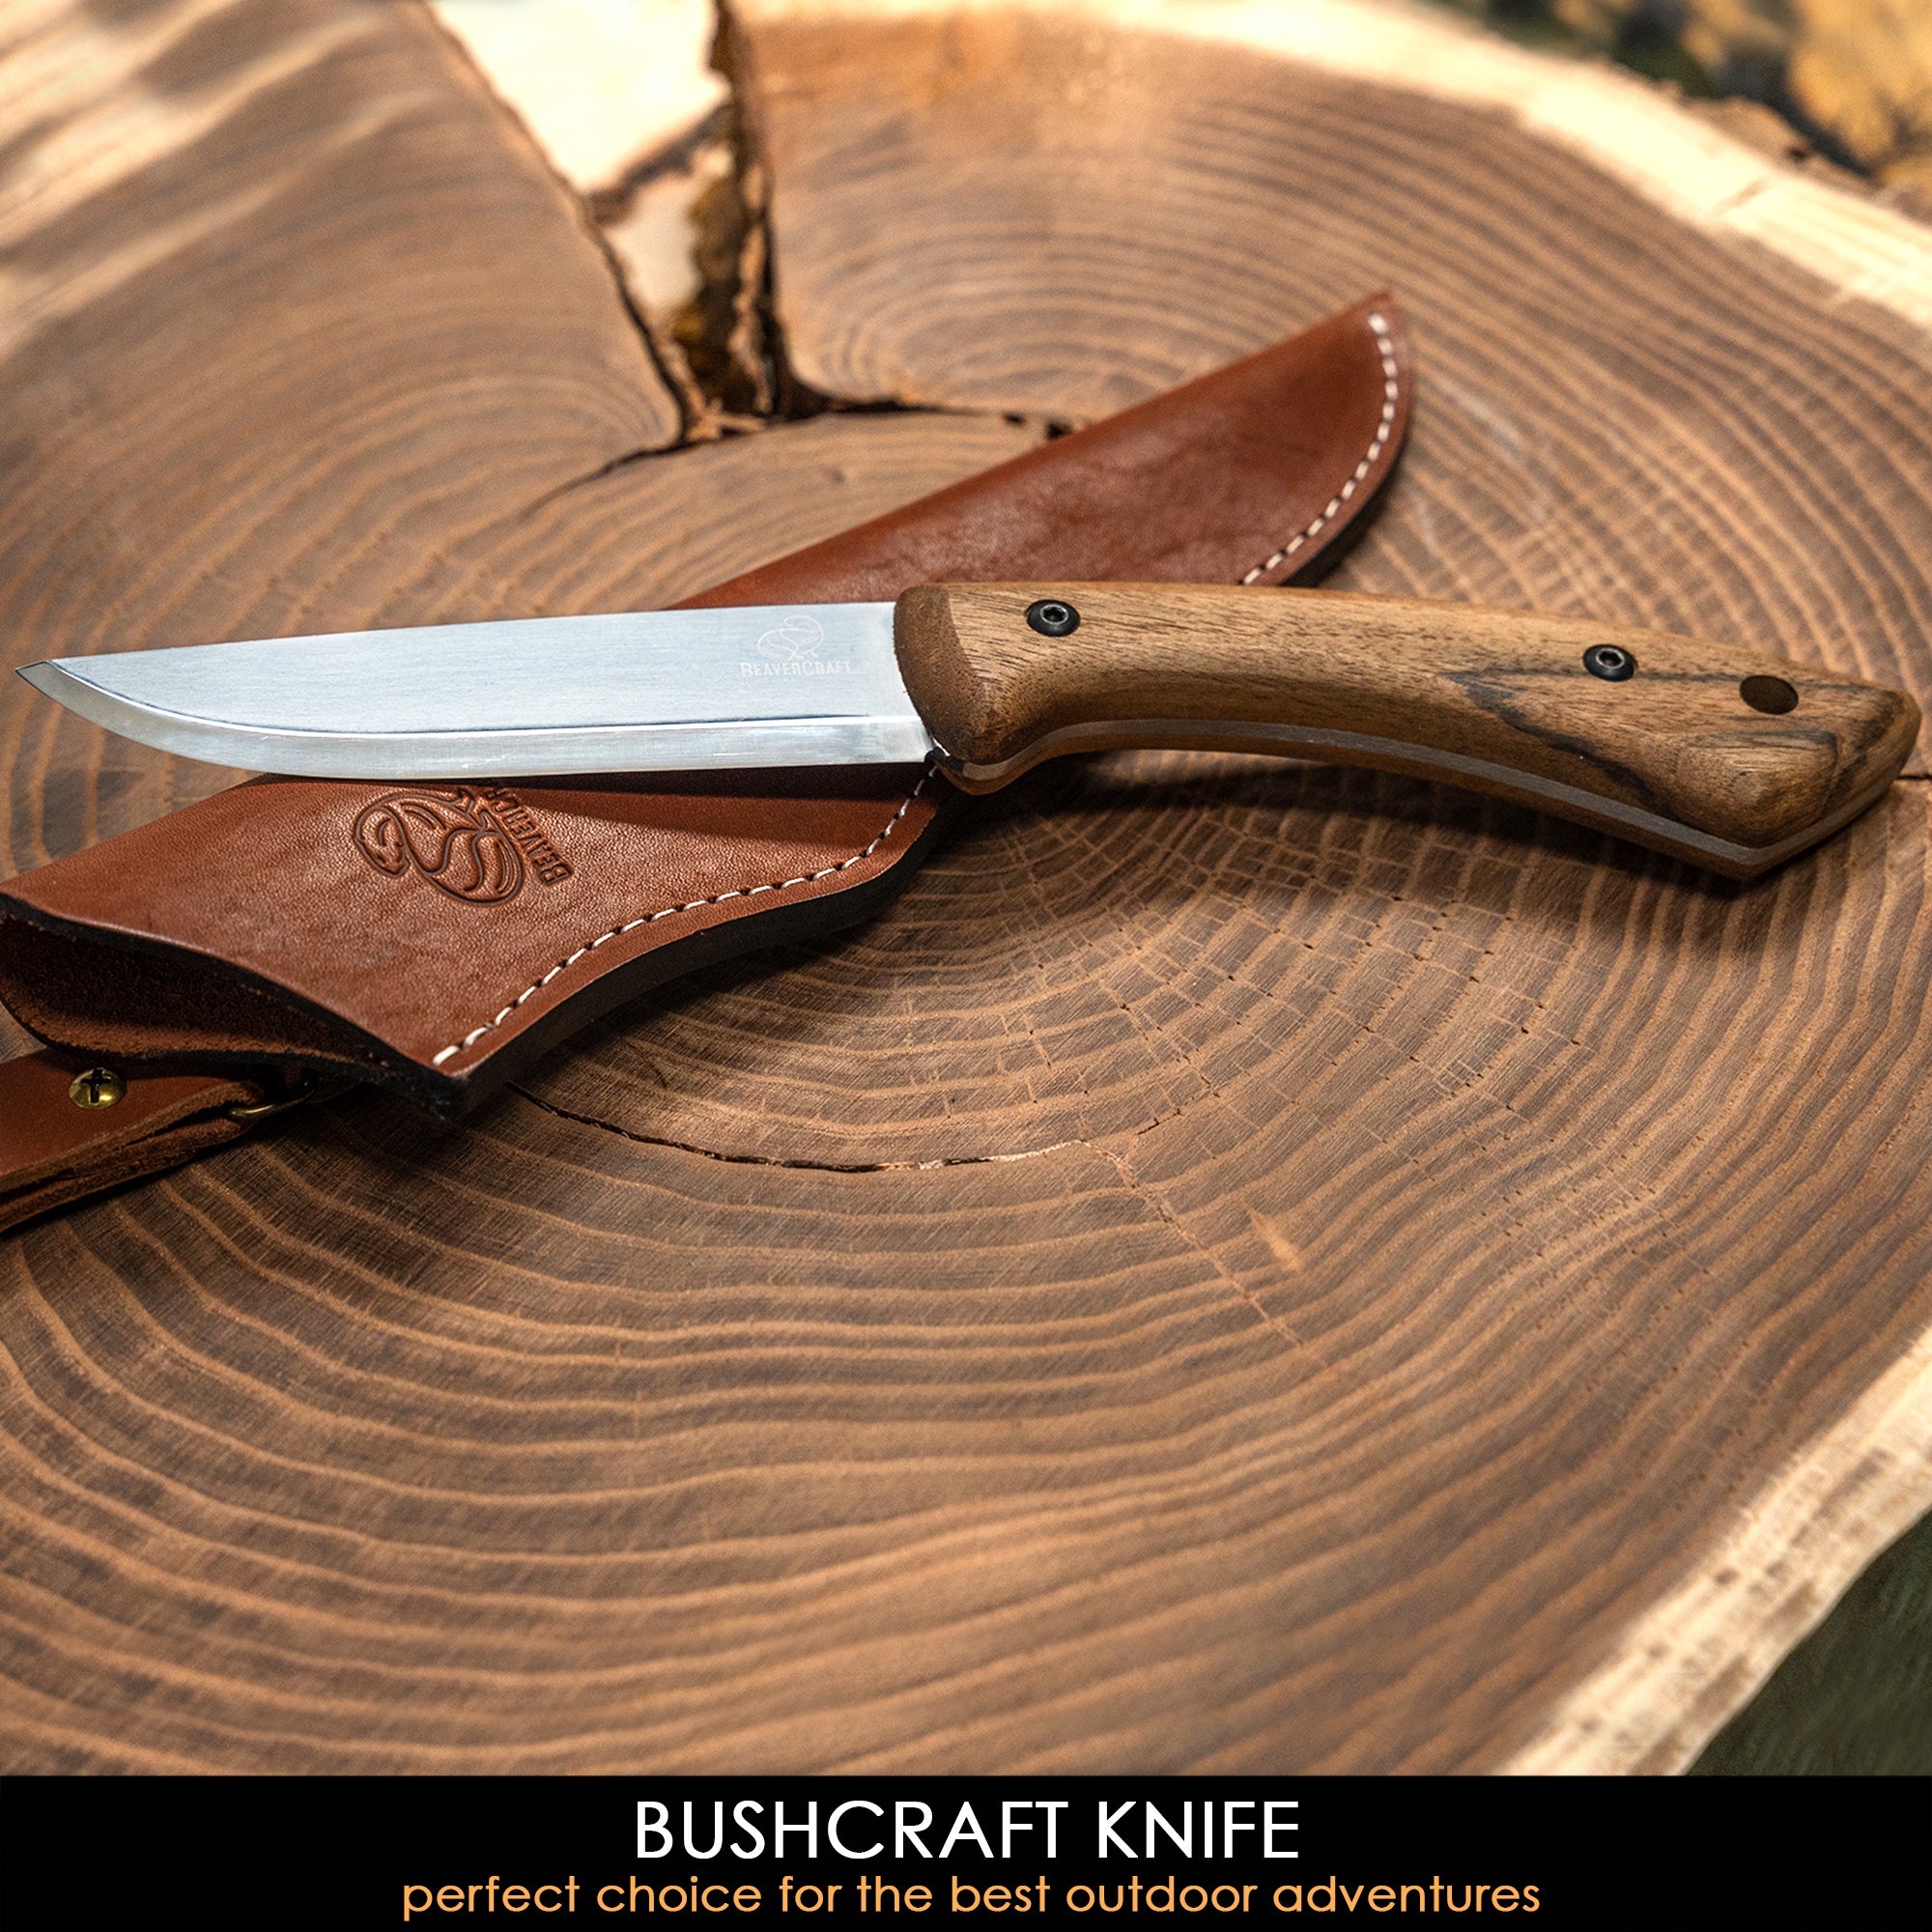  High Carbon Steel Knife - Handmade Full Tang Bushcraft